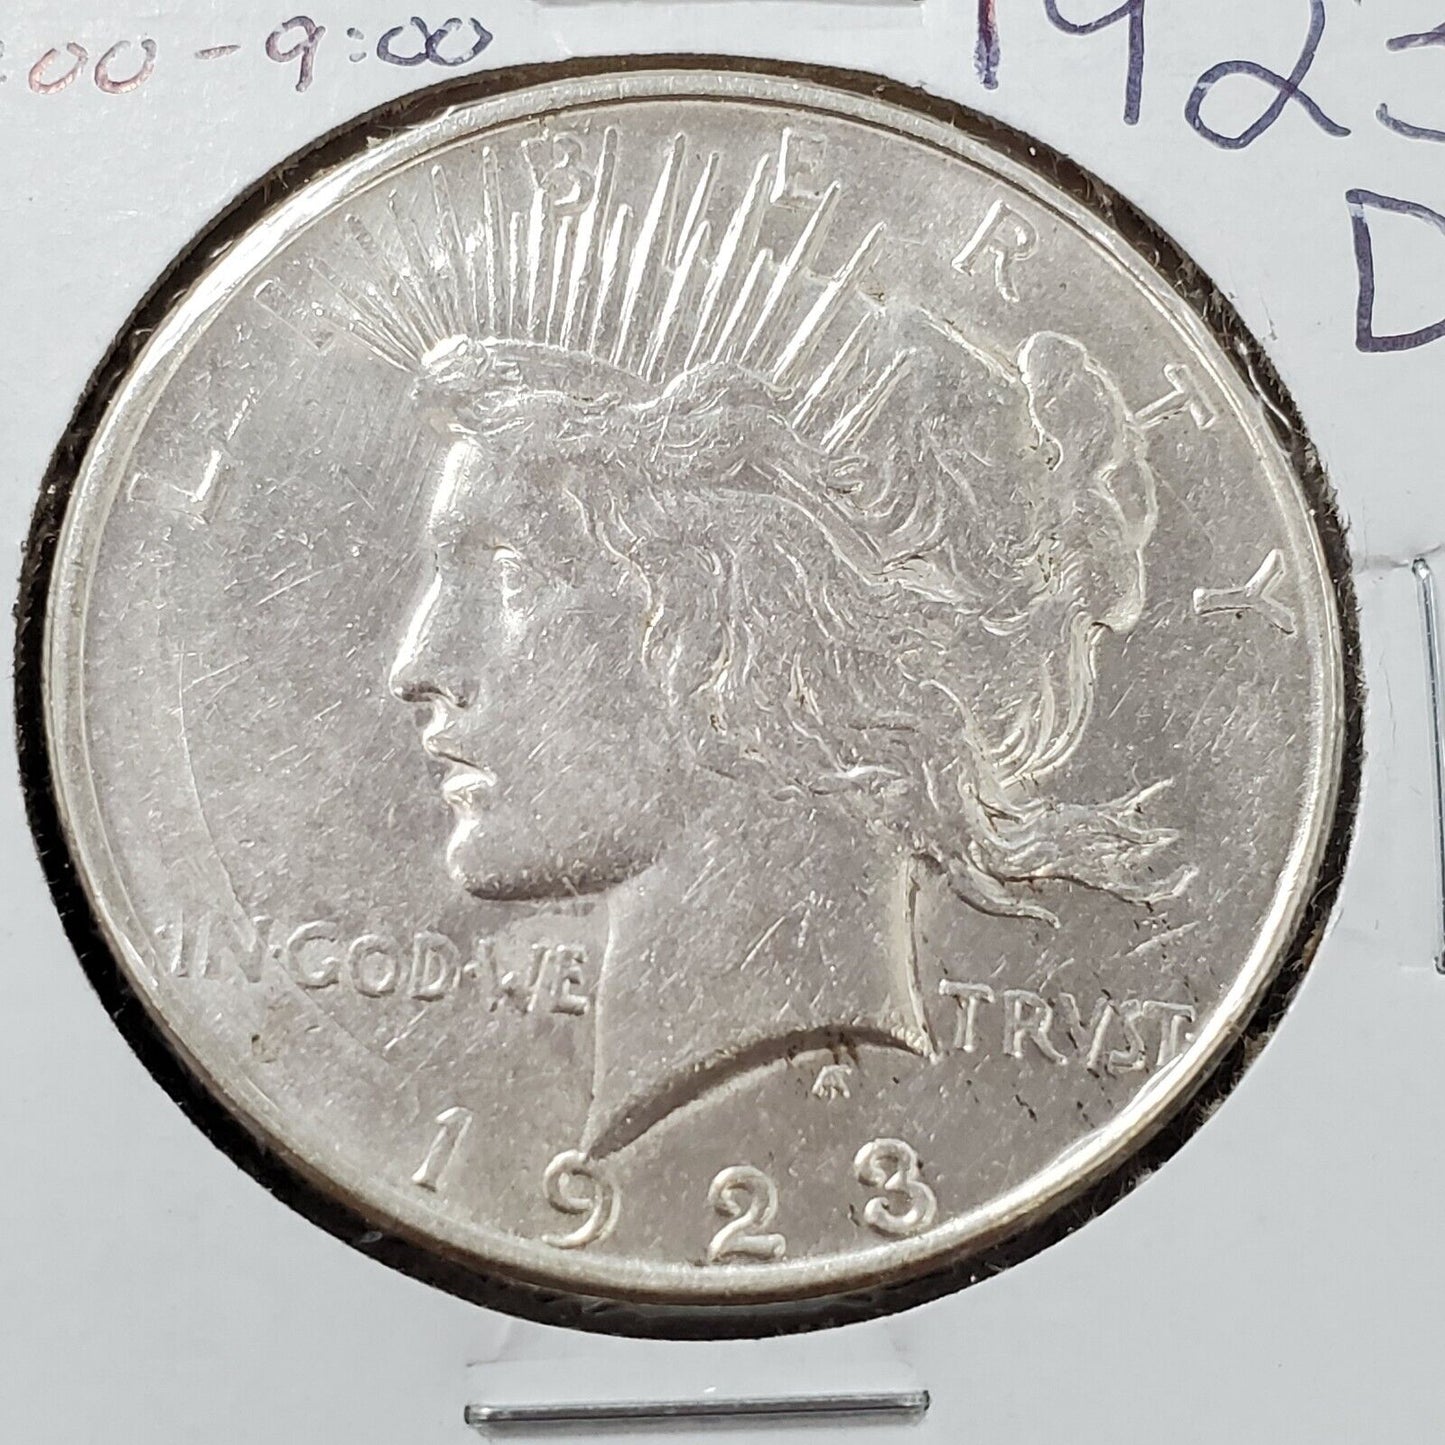 1923 D Peace Eagle Dollar Coin AU Detail 6-9 o Clock Die Break Crack Obverse Vam